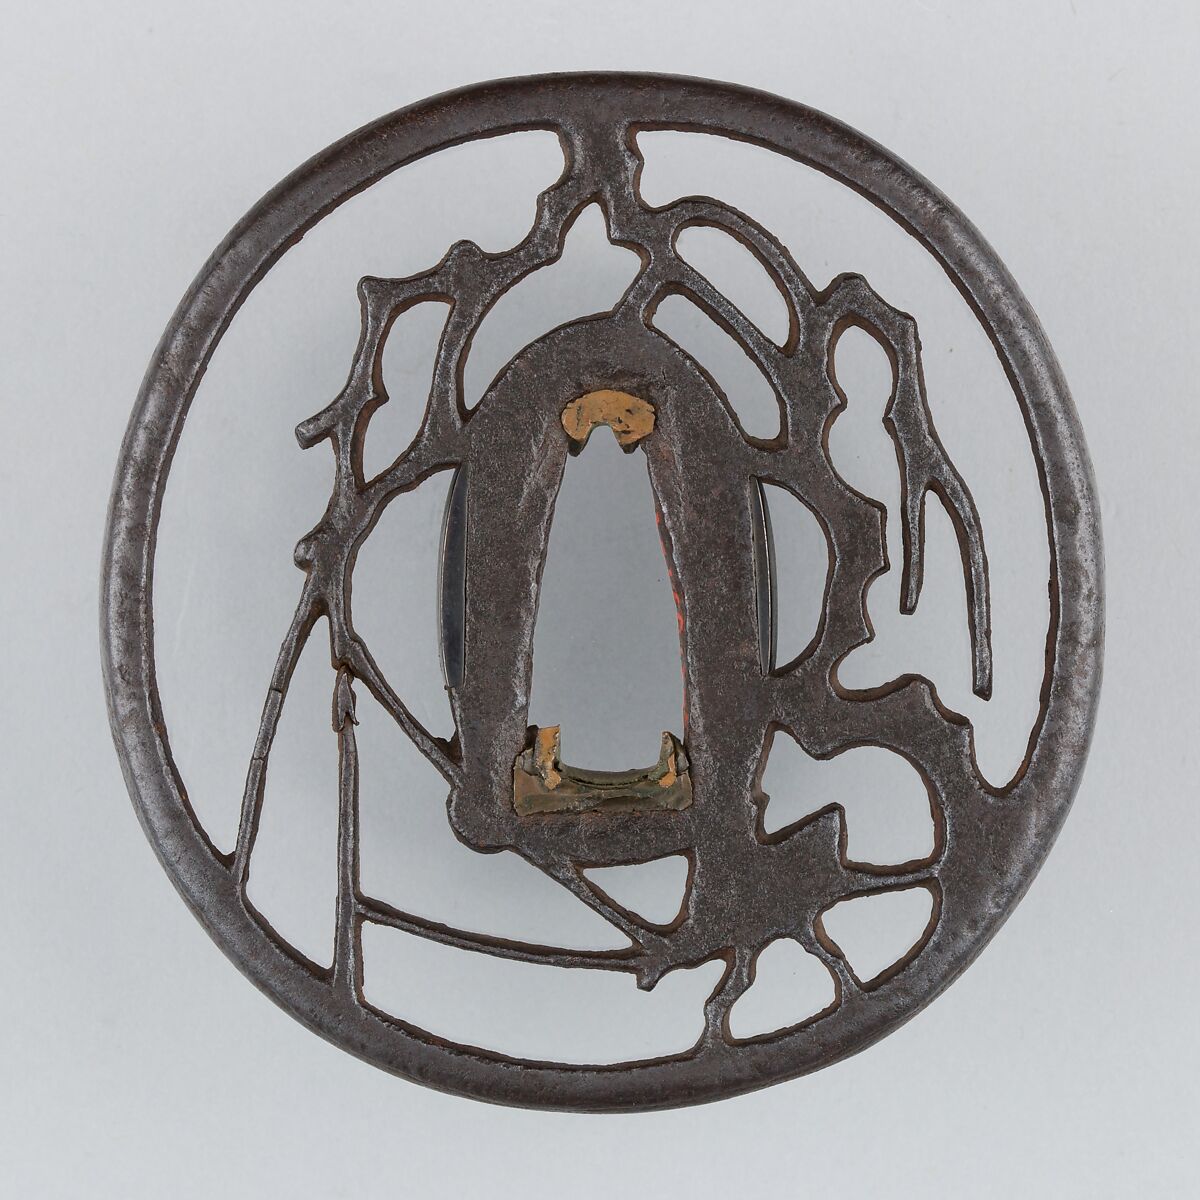 Sword Guard (Tsuba), Attributed to the Akasaka school (Japanese), Iron, copper, Japanese 